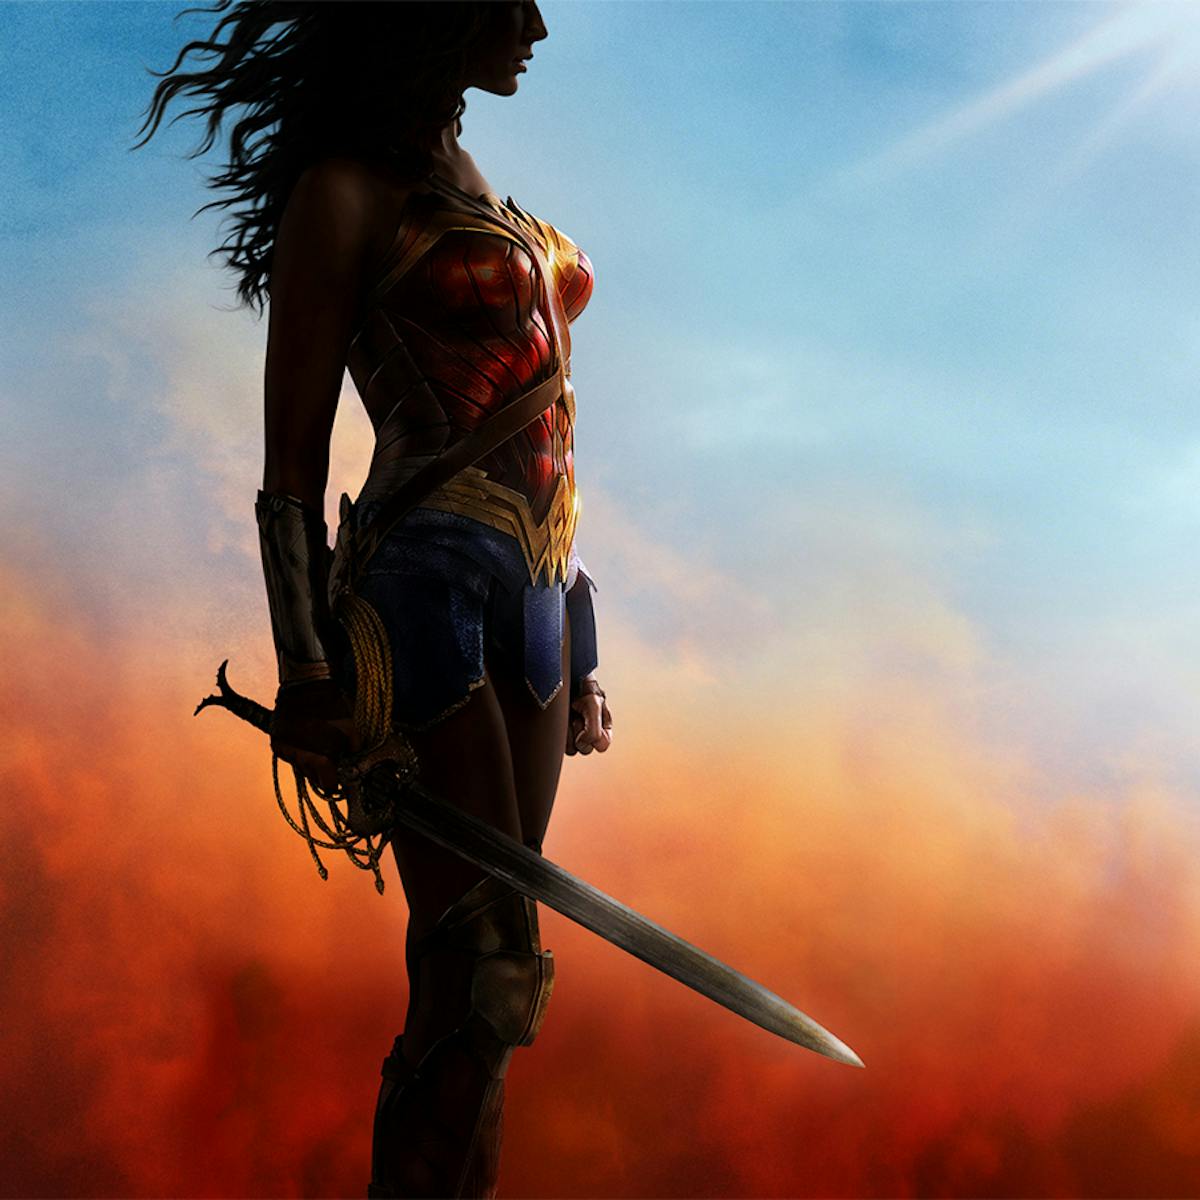 Wonder Woman in the 2017 film.